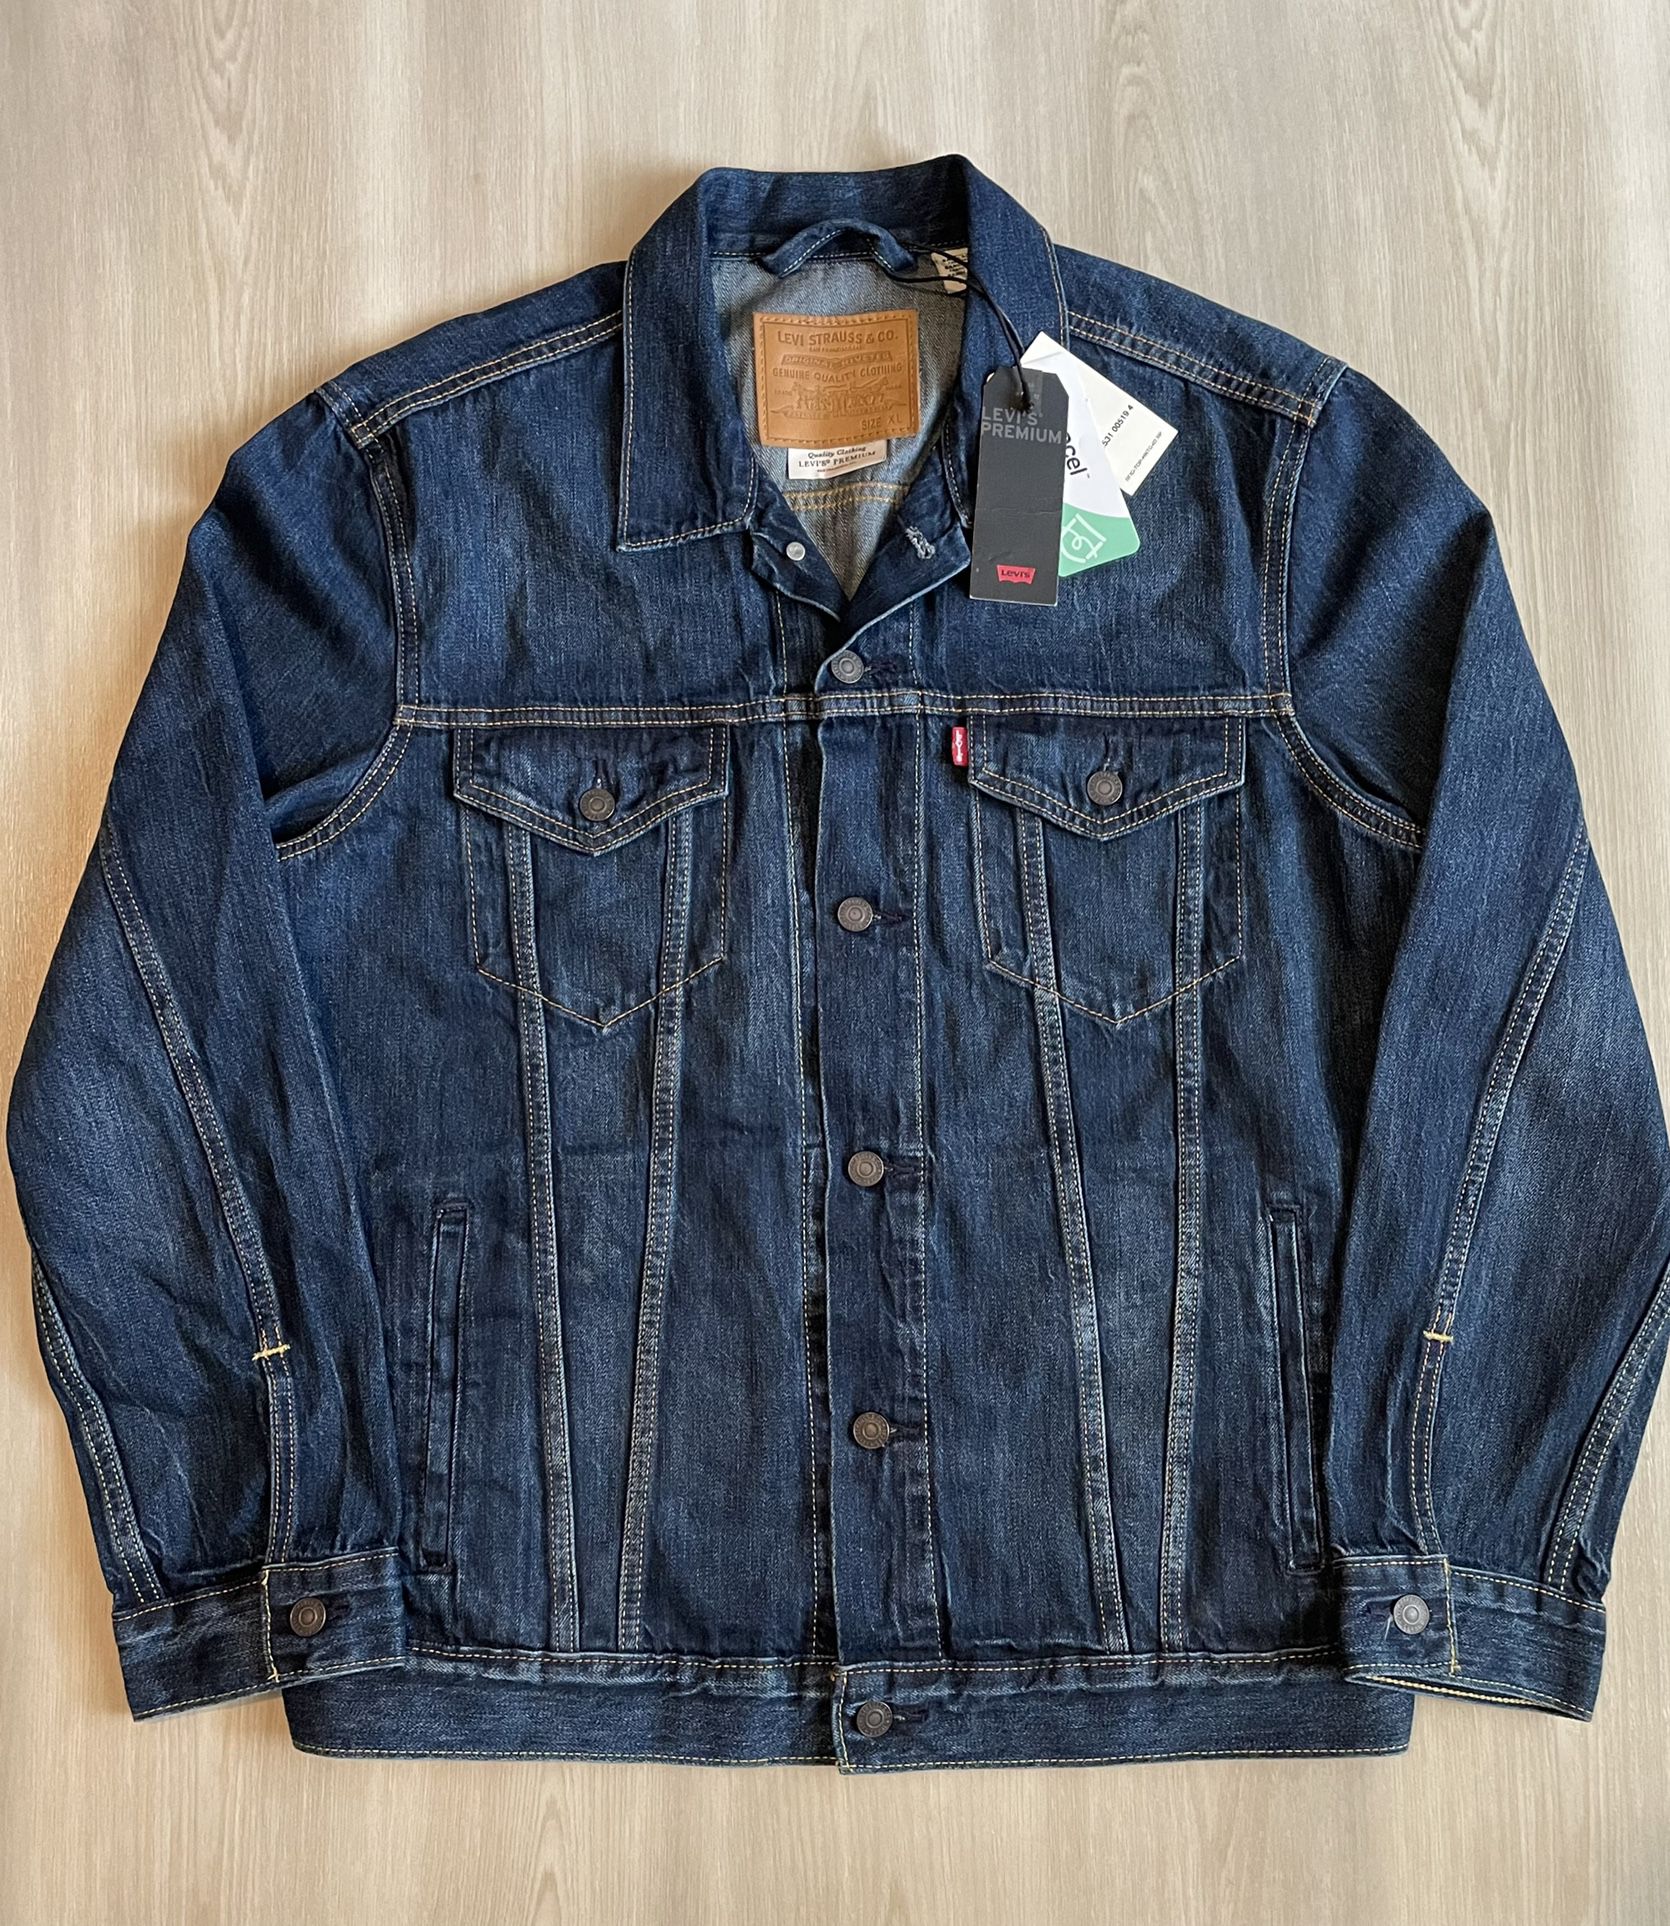 New With Tags Levi's Premium Men's Classic Denim Trucker Jacket Wash Tencel Fabric